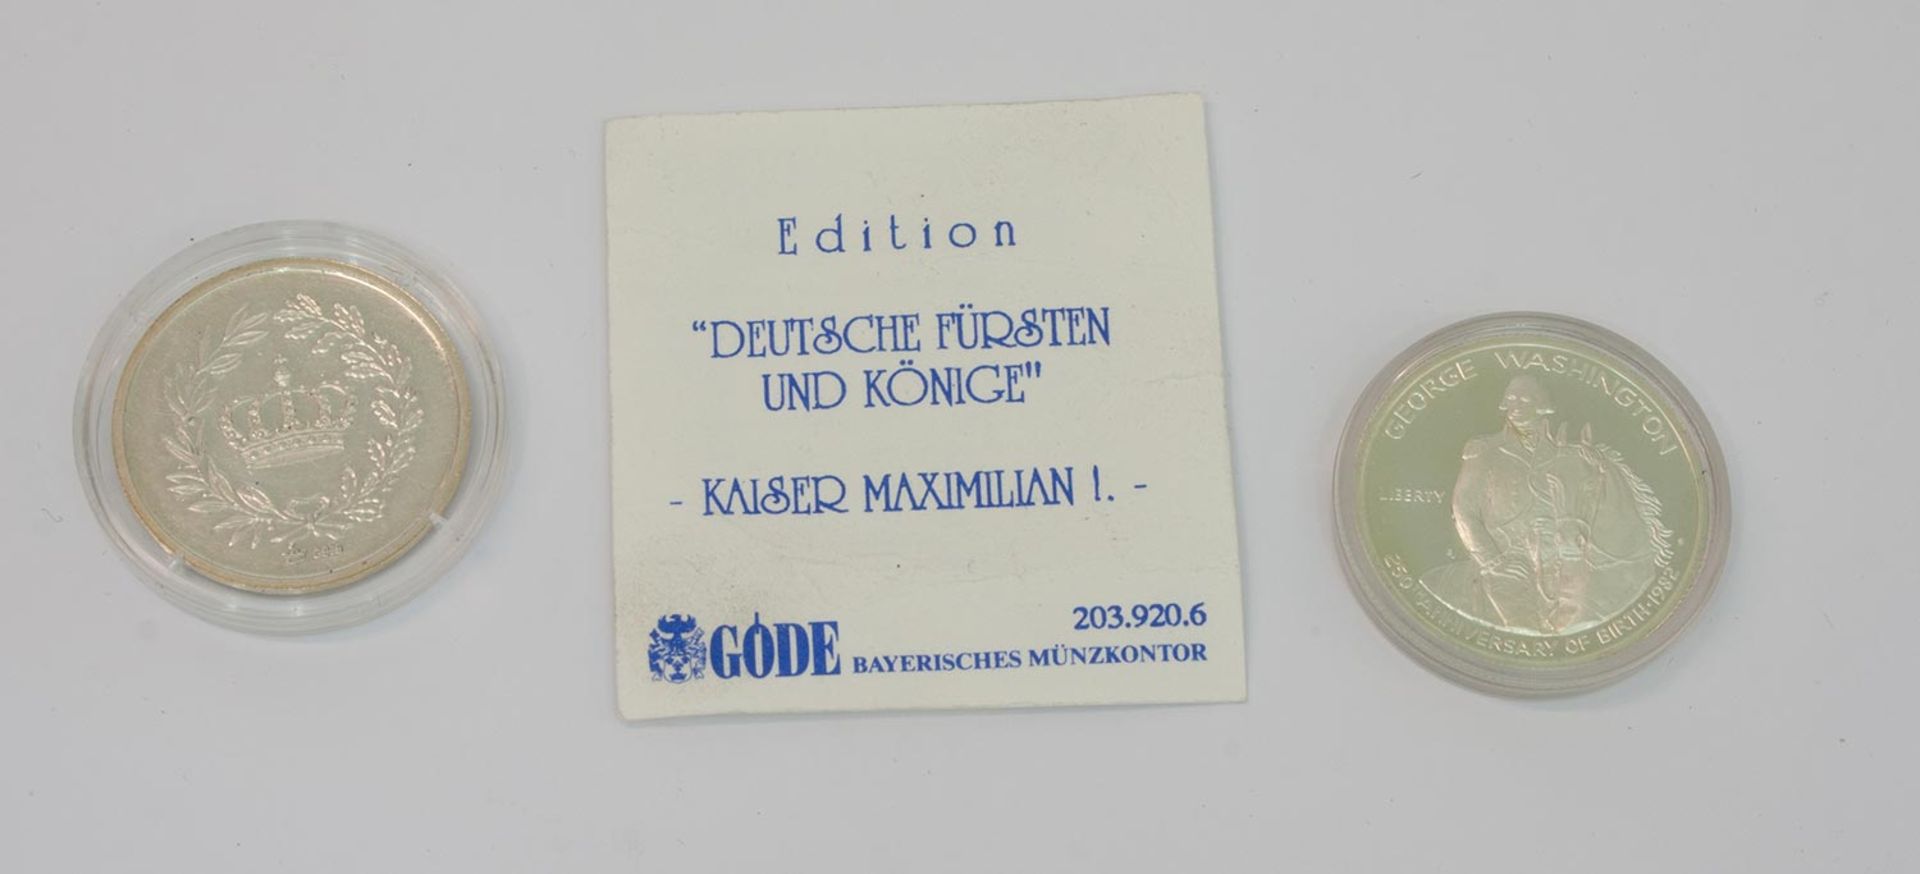 Lot Medaille mit Kaiser Maximilian, Feinsilber, Half Dollar USA 1982, George Washington, Silber